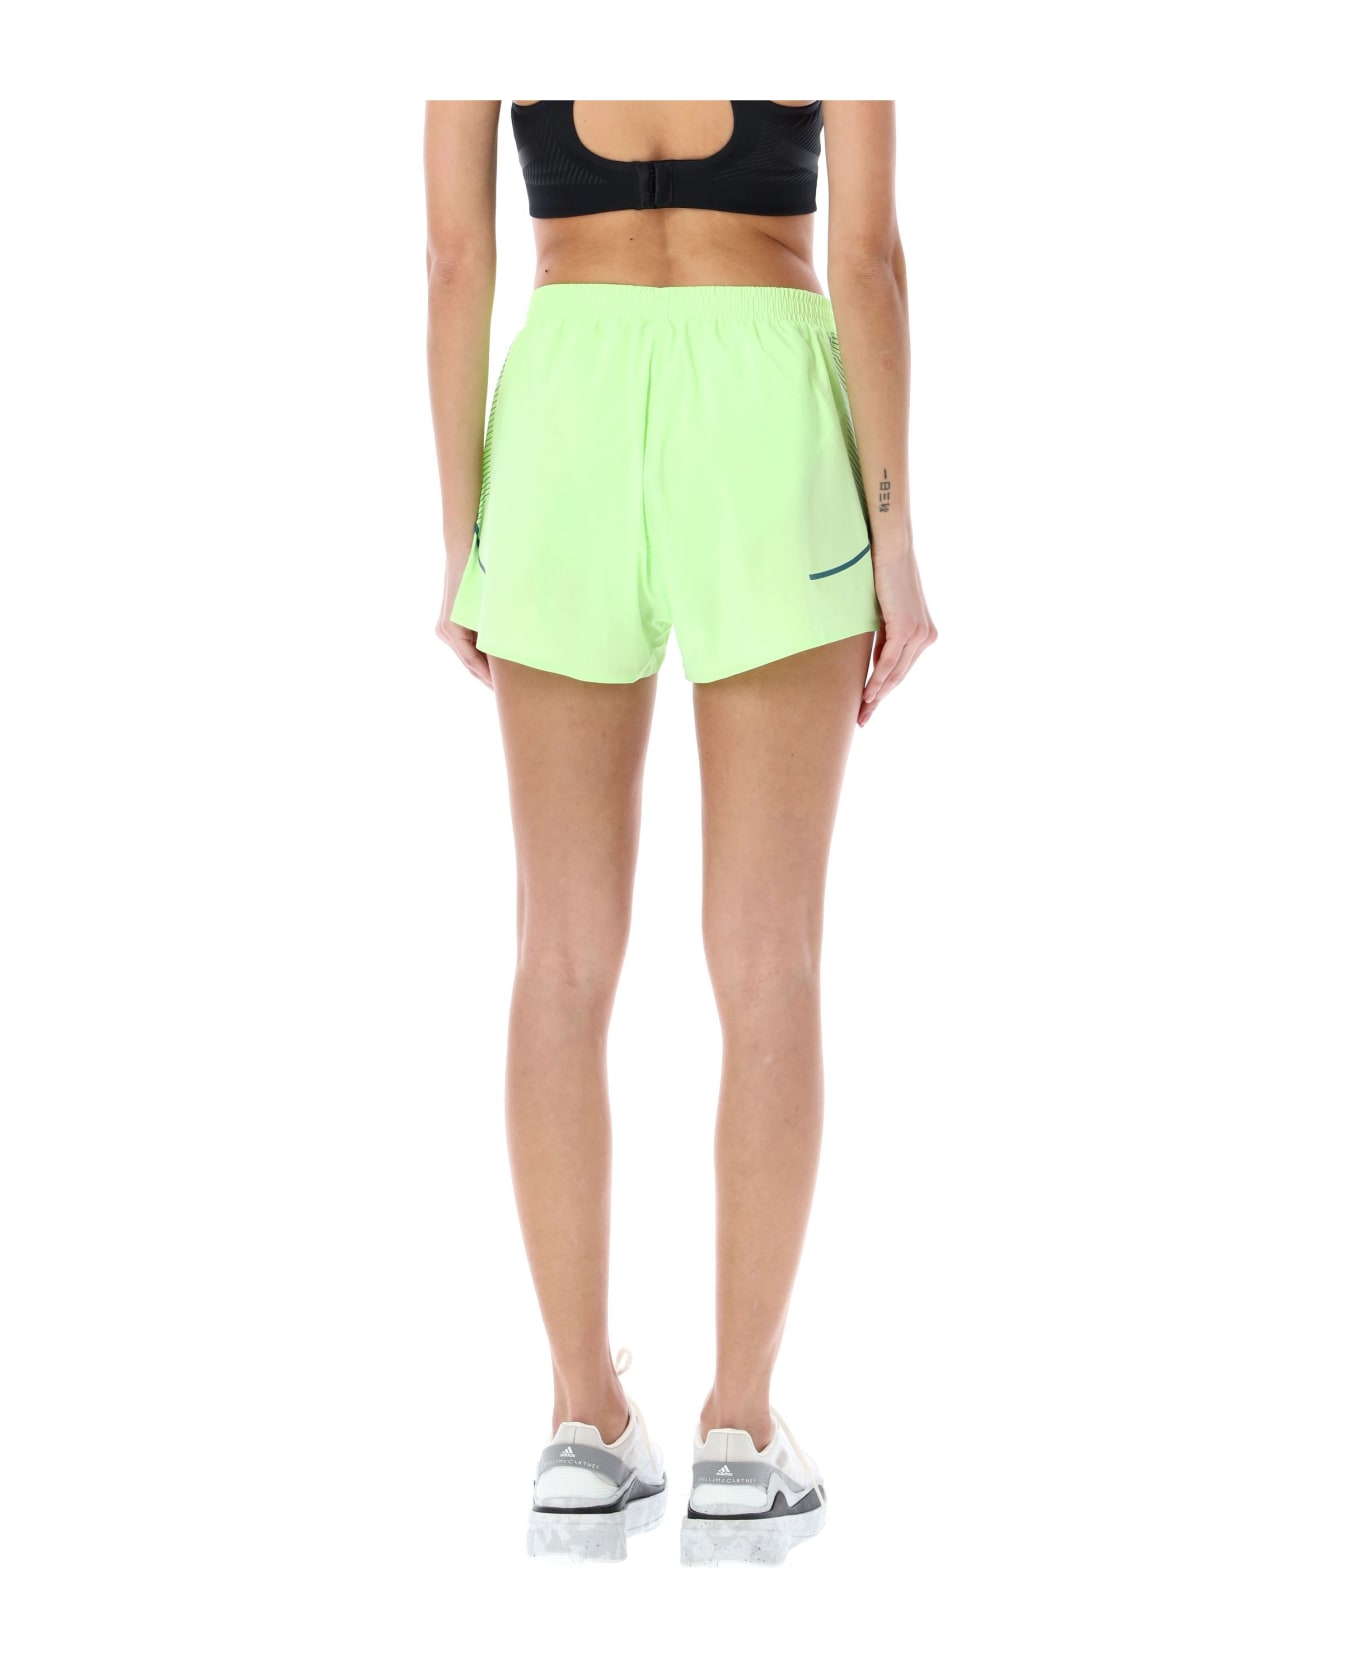 Adidas by Stella McCartney Truepace Running Shorts - GREEN SPARK